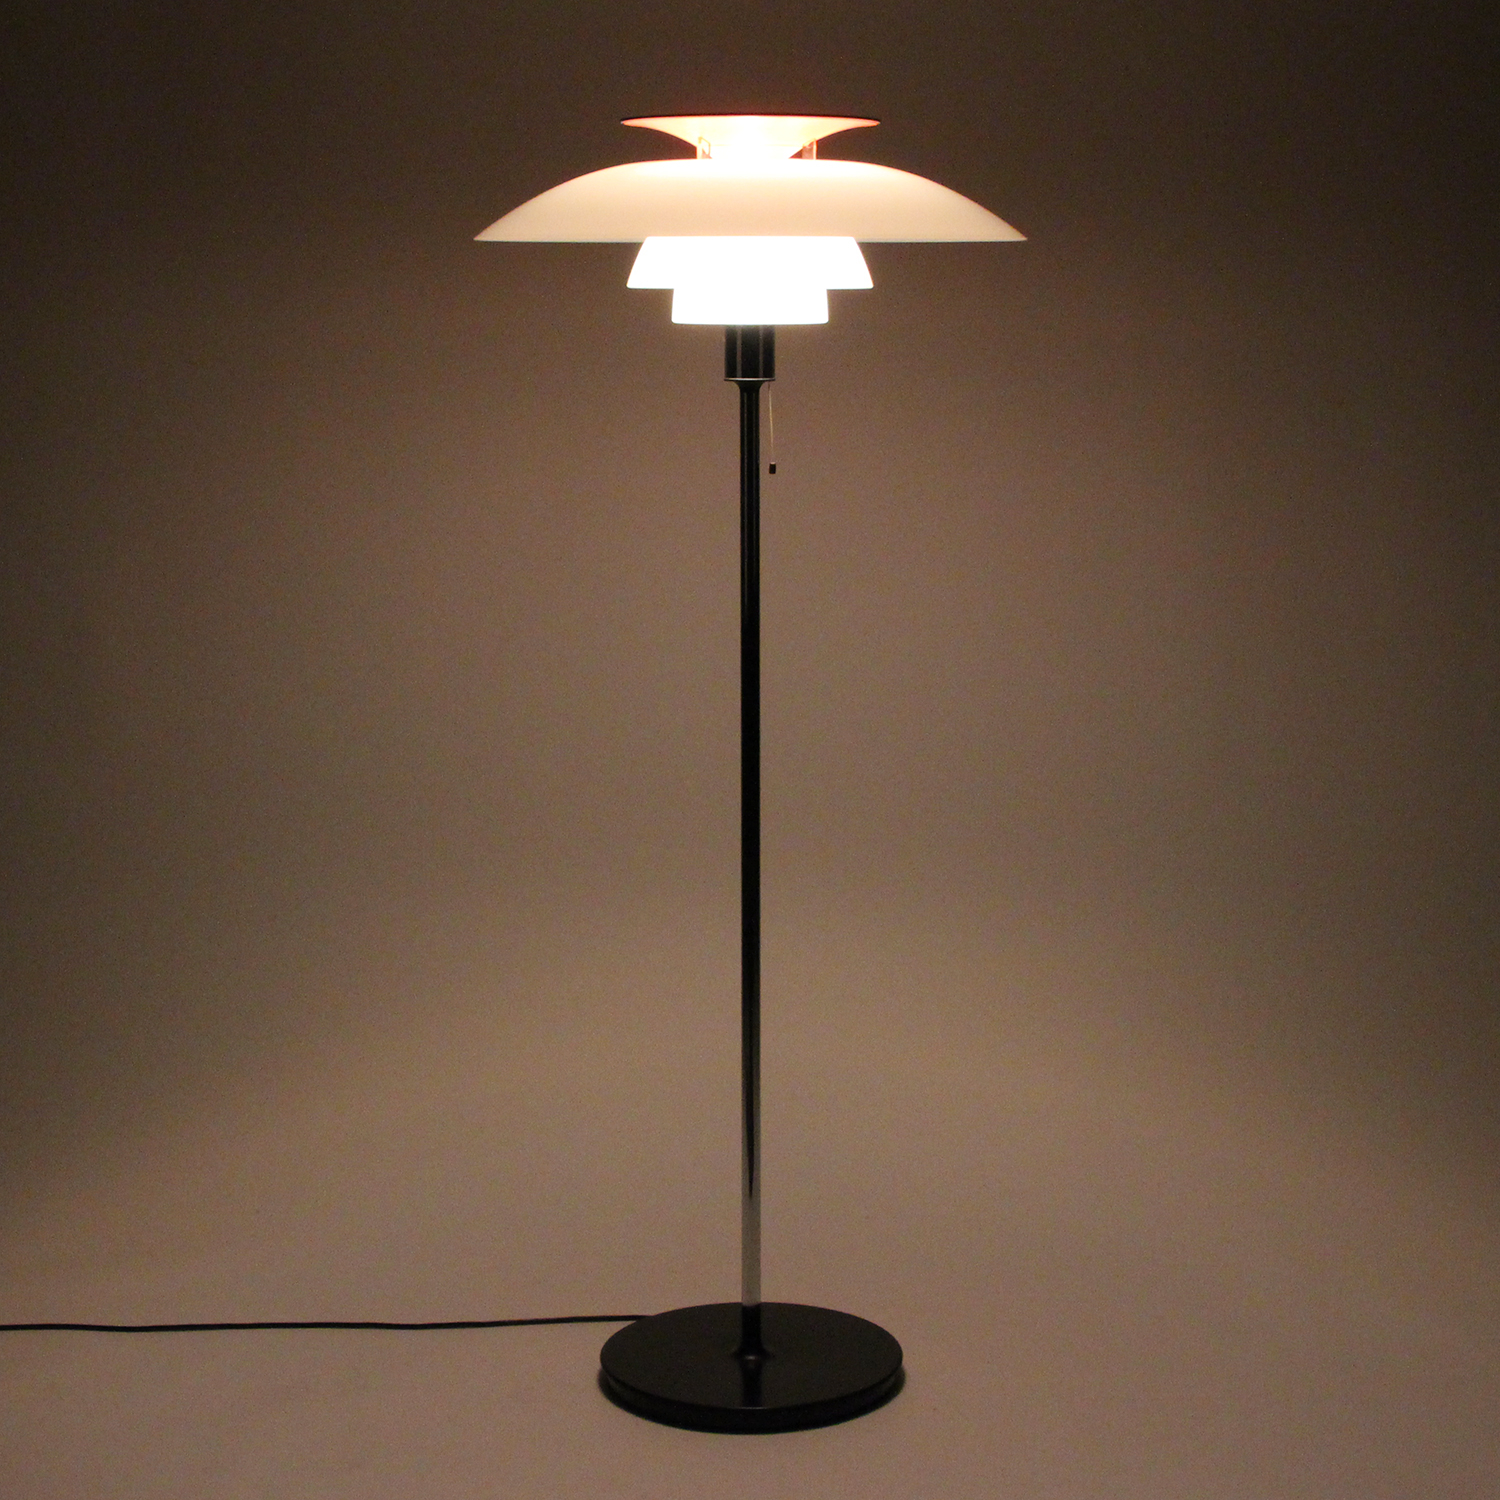 Ph 80 Floor Lamp Danish Vintage Design throughout sizing 1500 X 1500